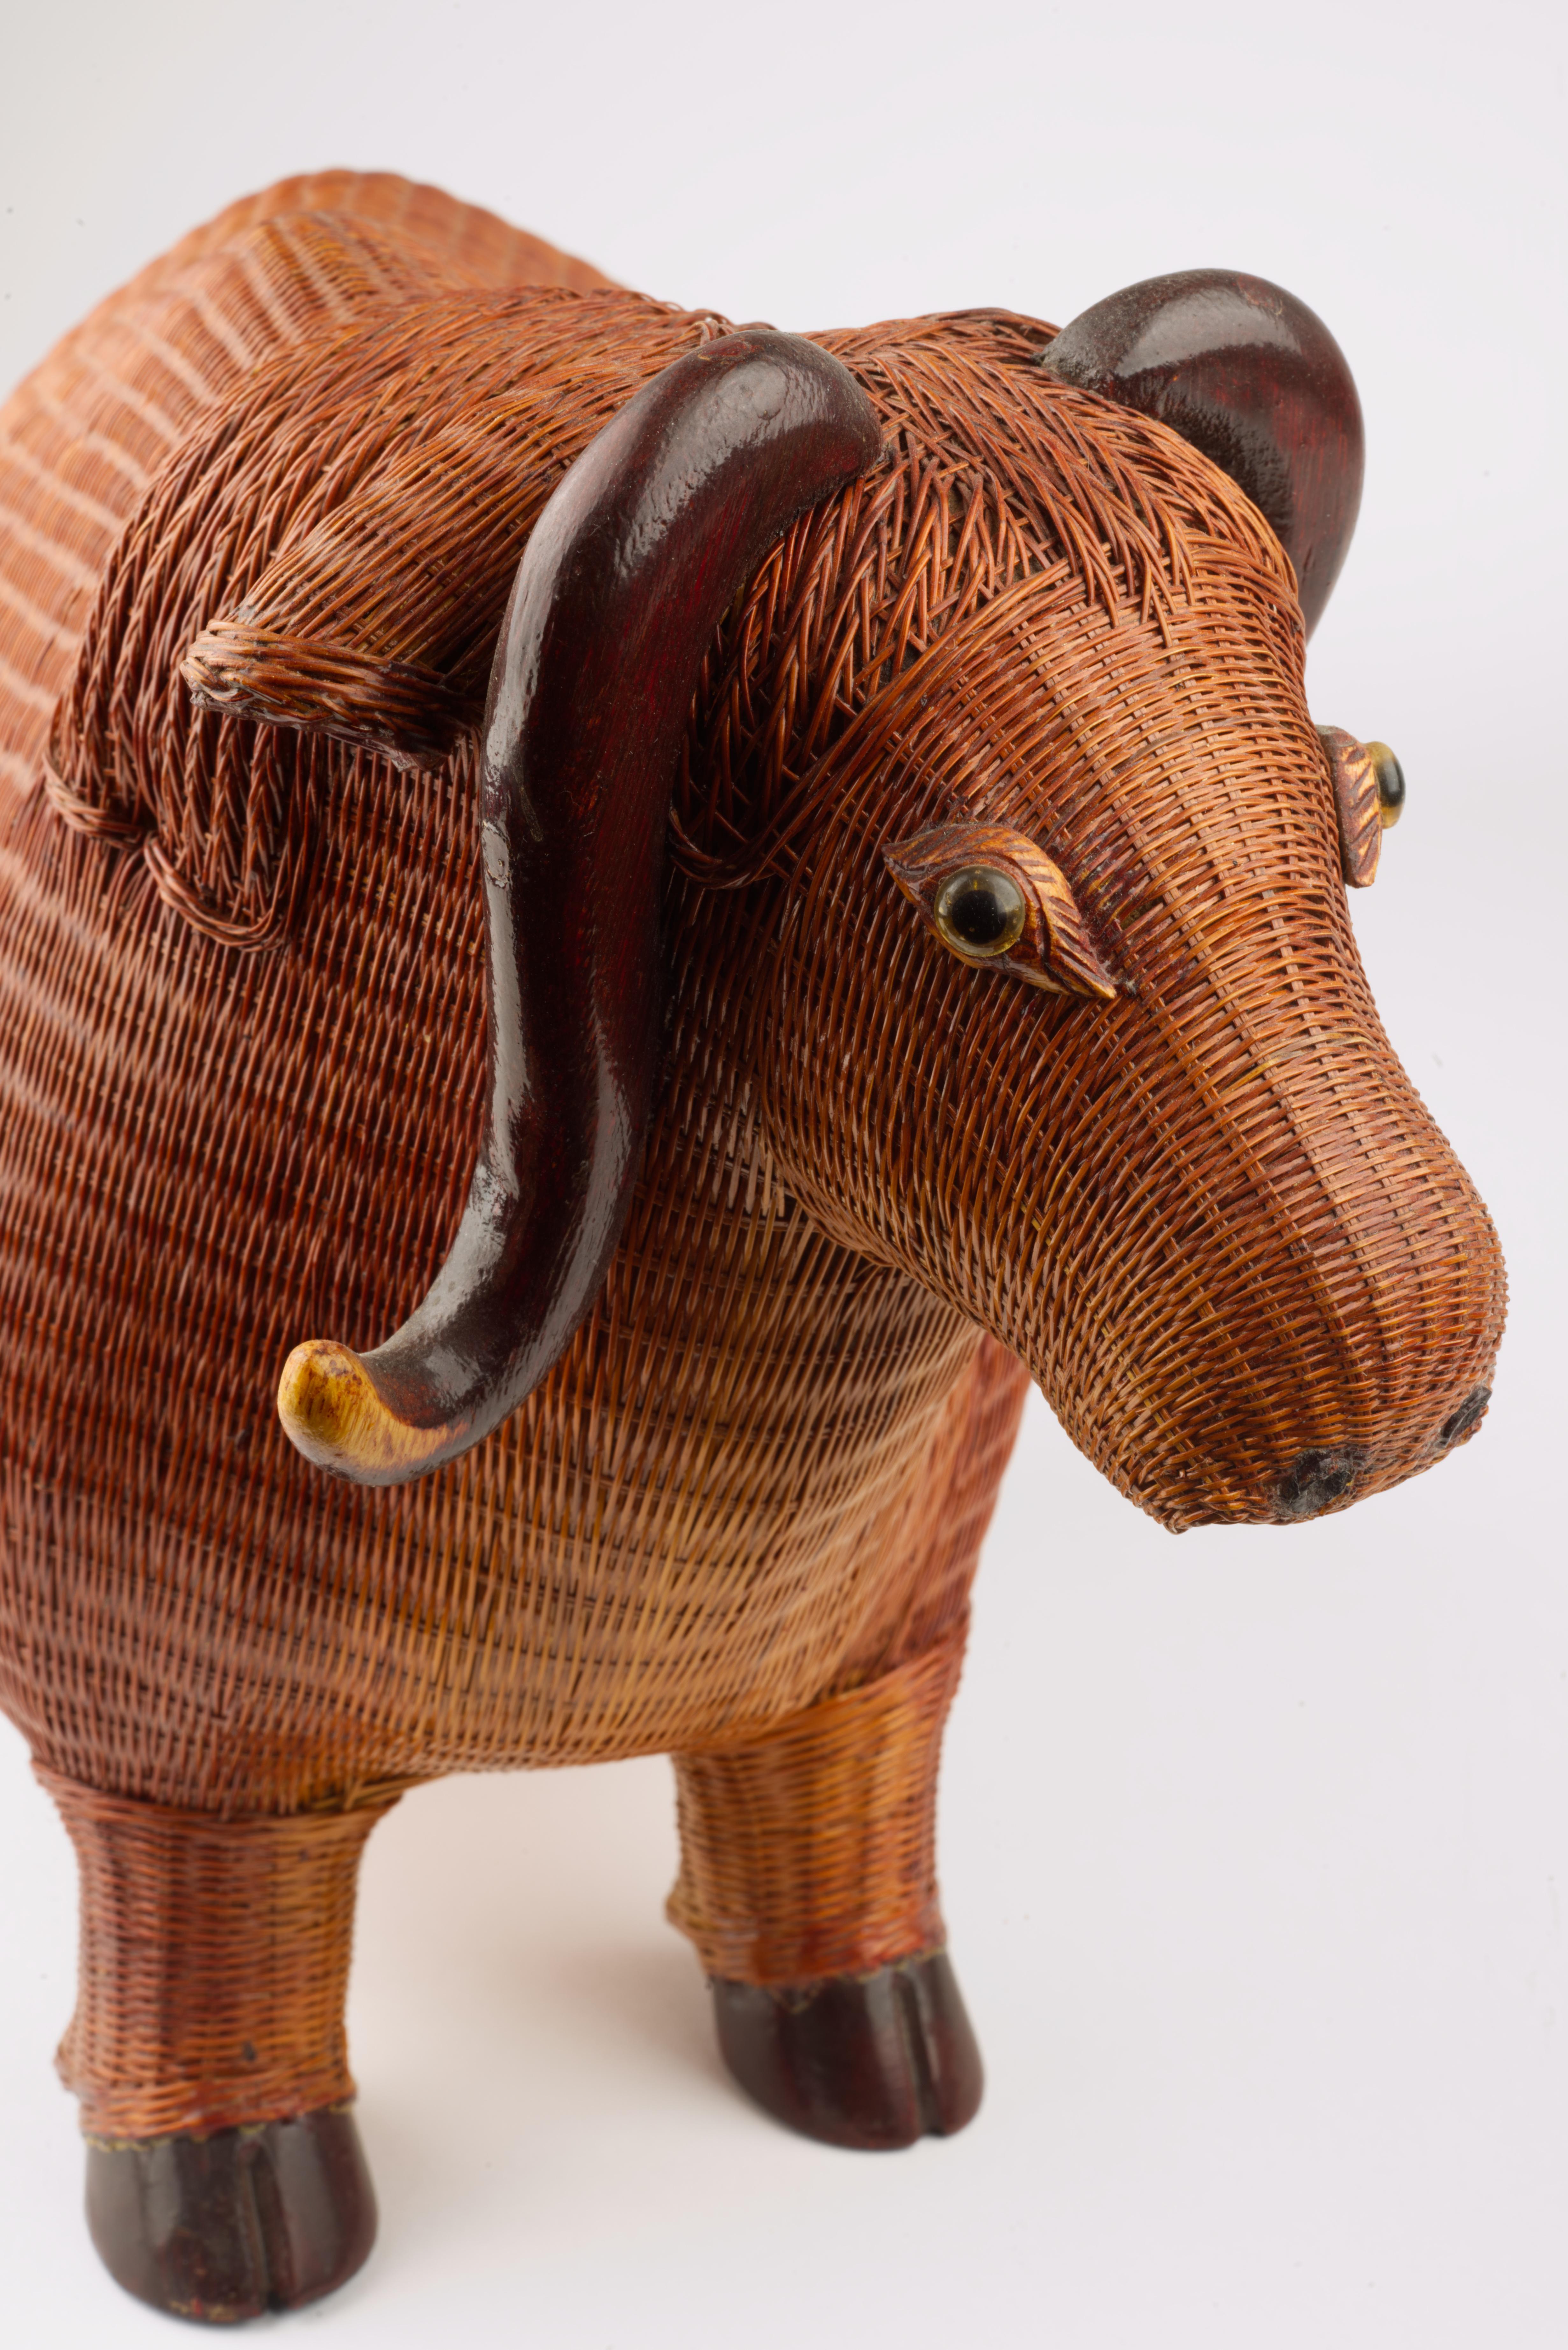 Wicker Water Buffalo Figurine by Shanghai Handicrafts For Sale 1